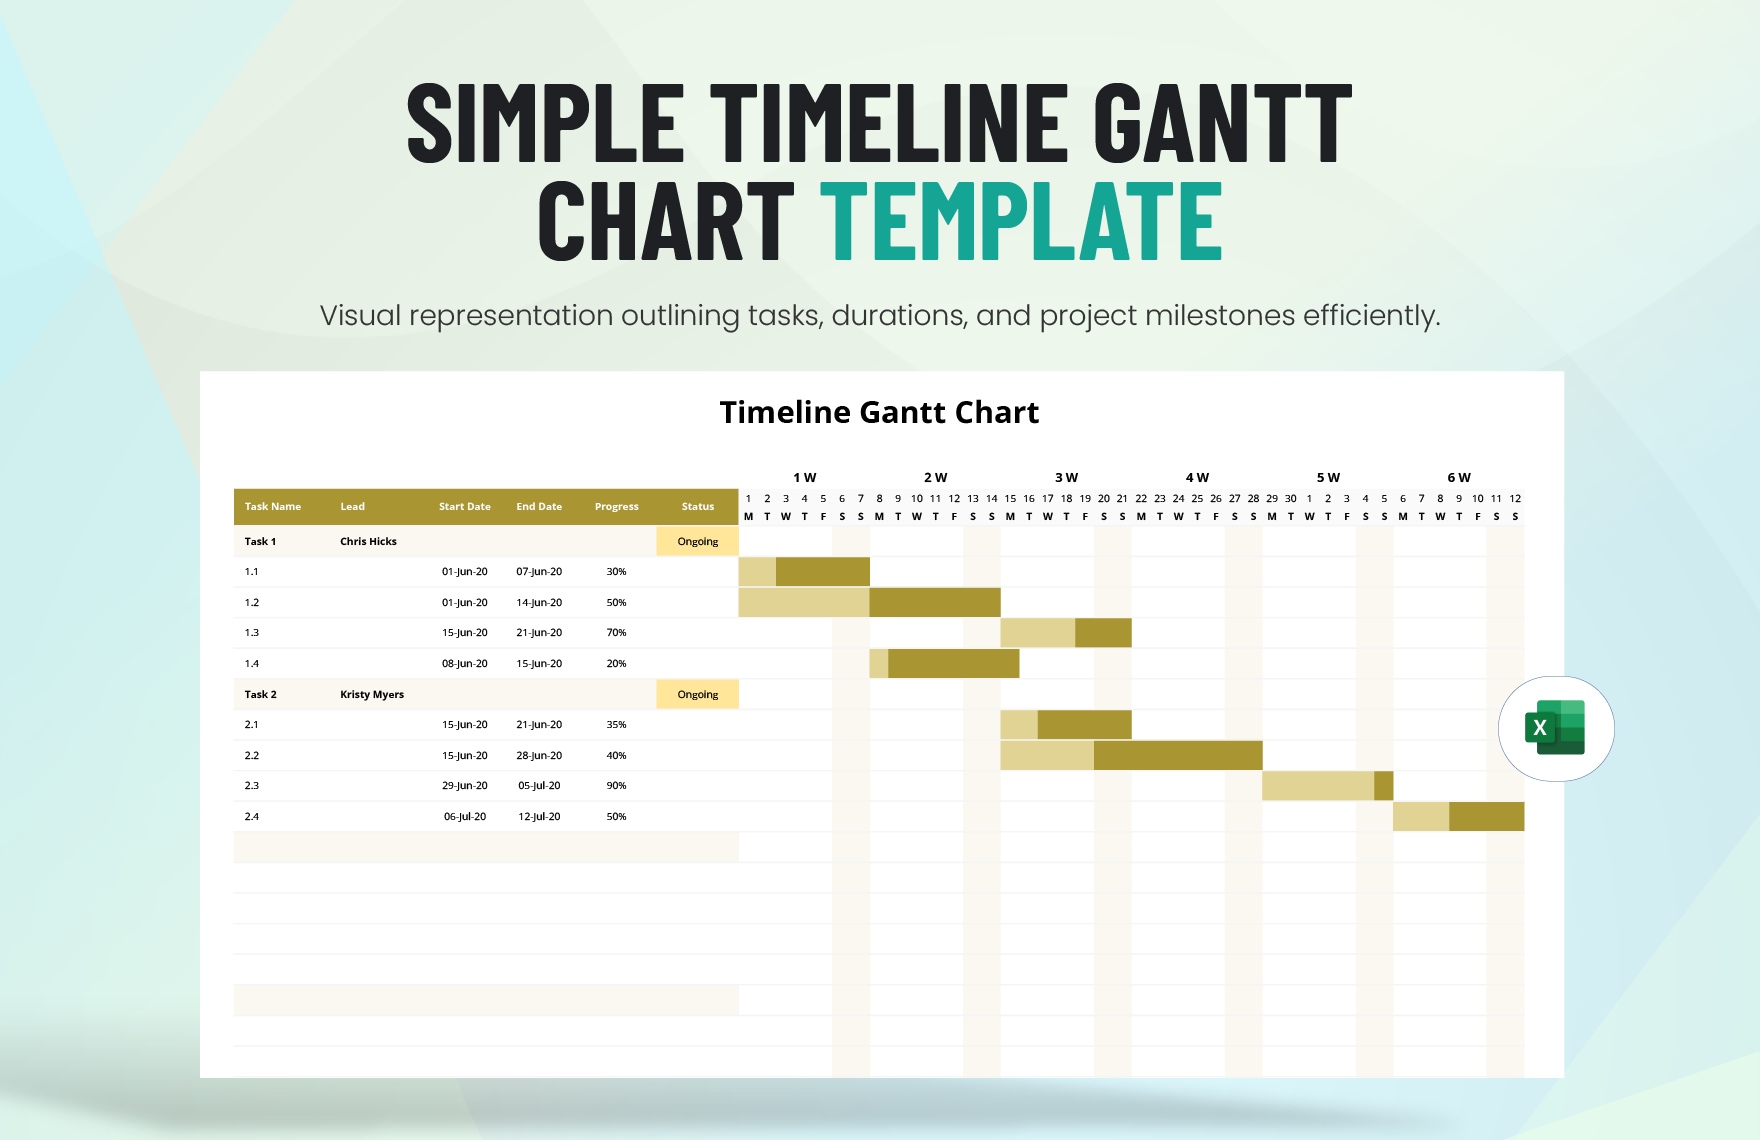 Simple Timeline Gantt Chart Template in Excel